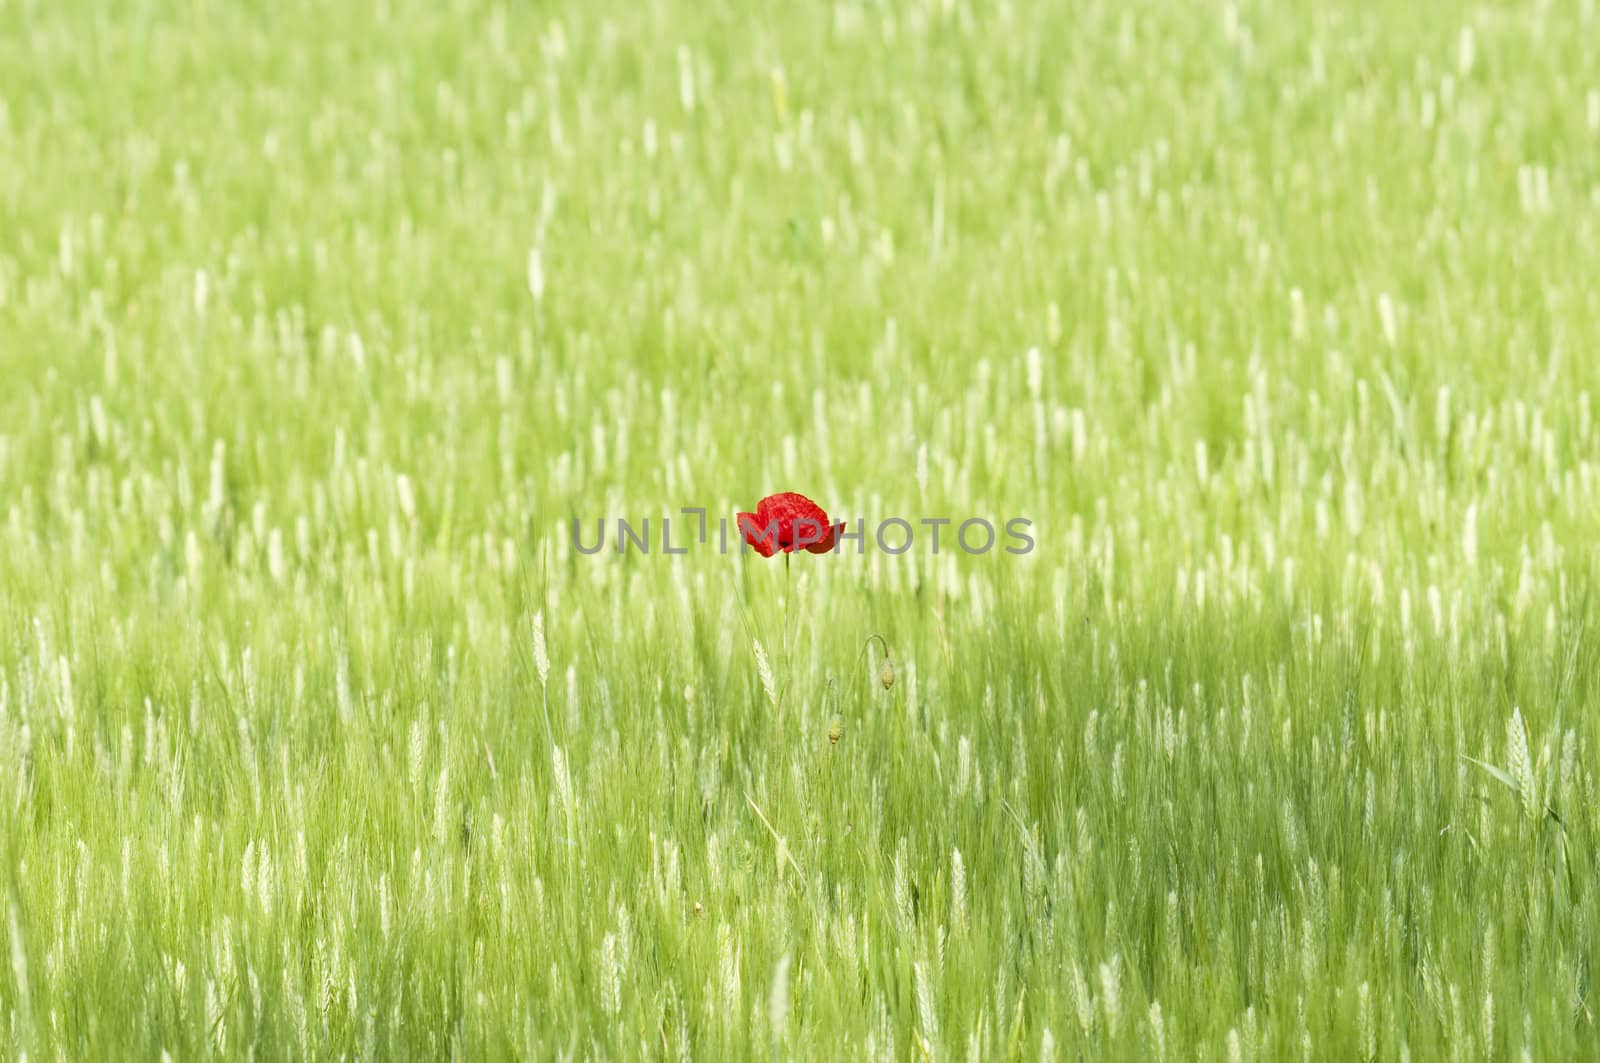 Isolated Poppy flower in a green, wheat field